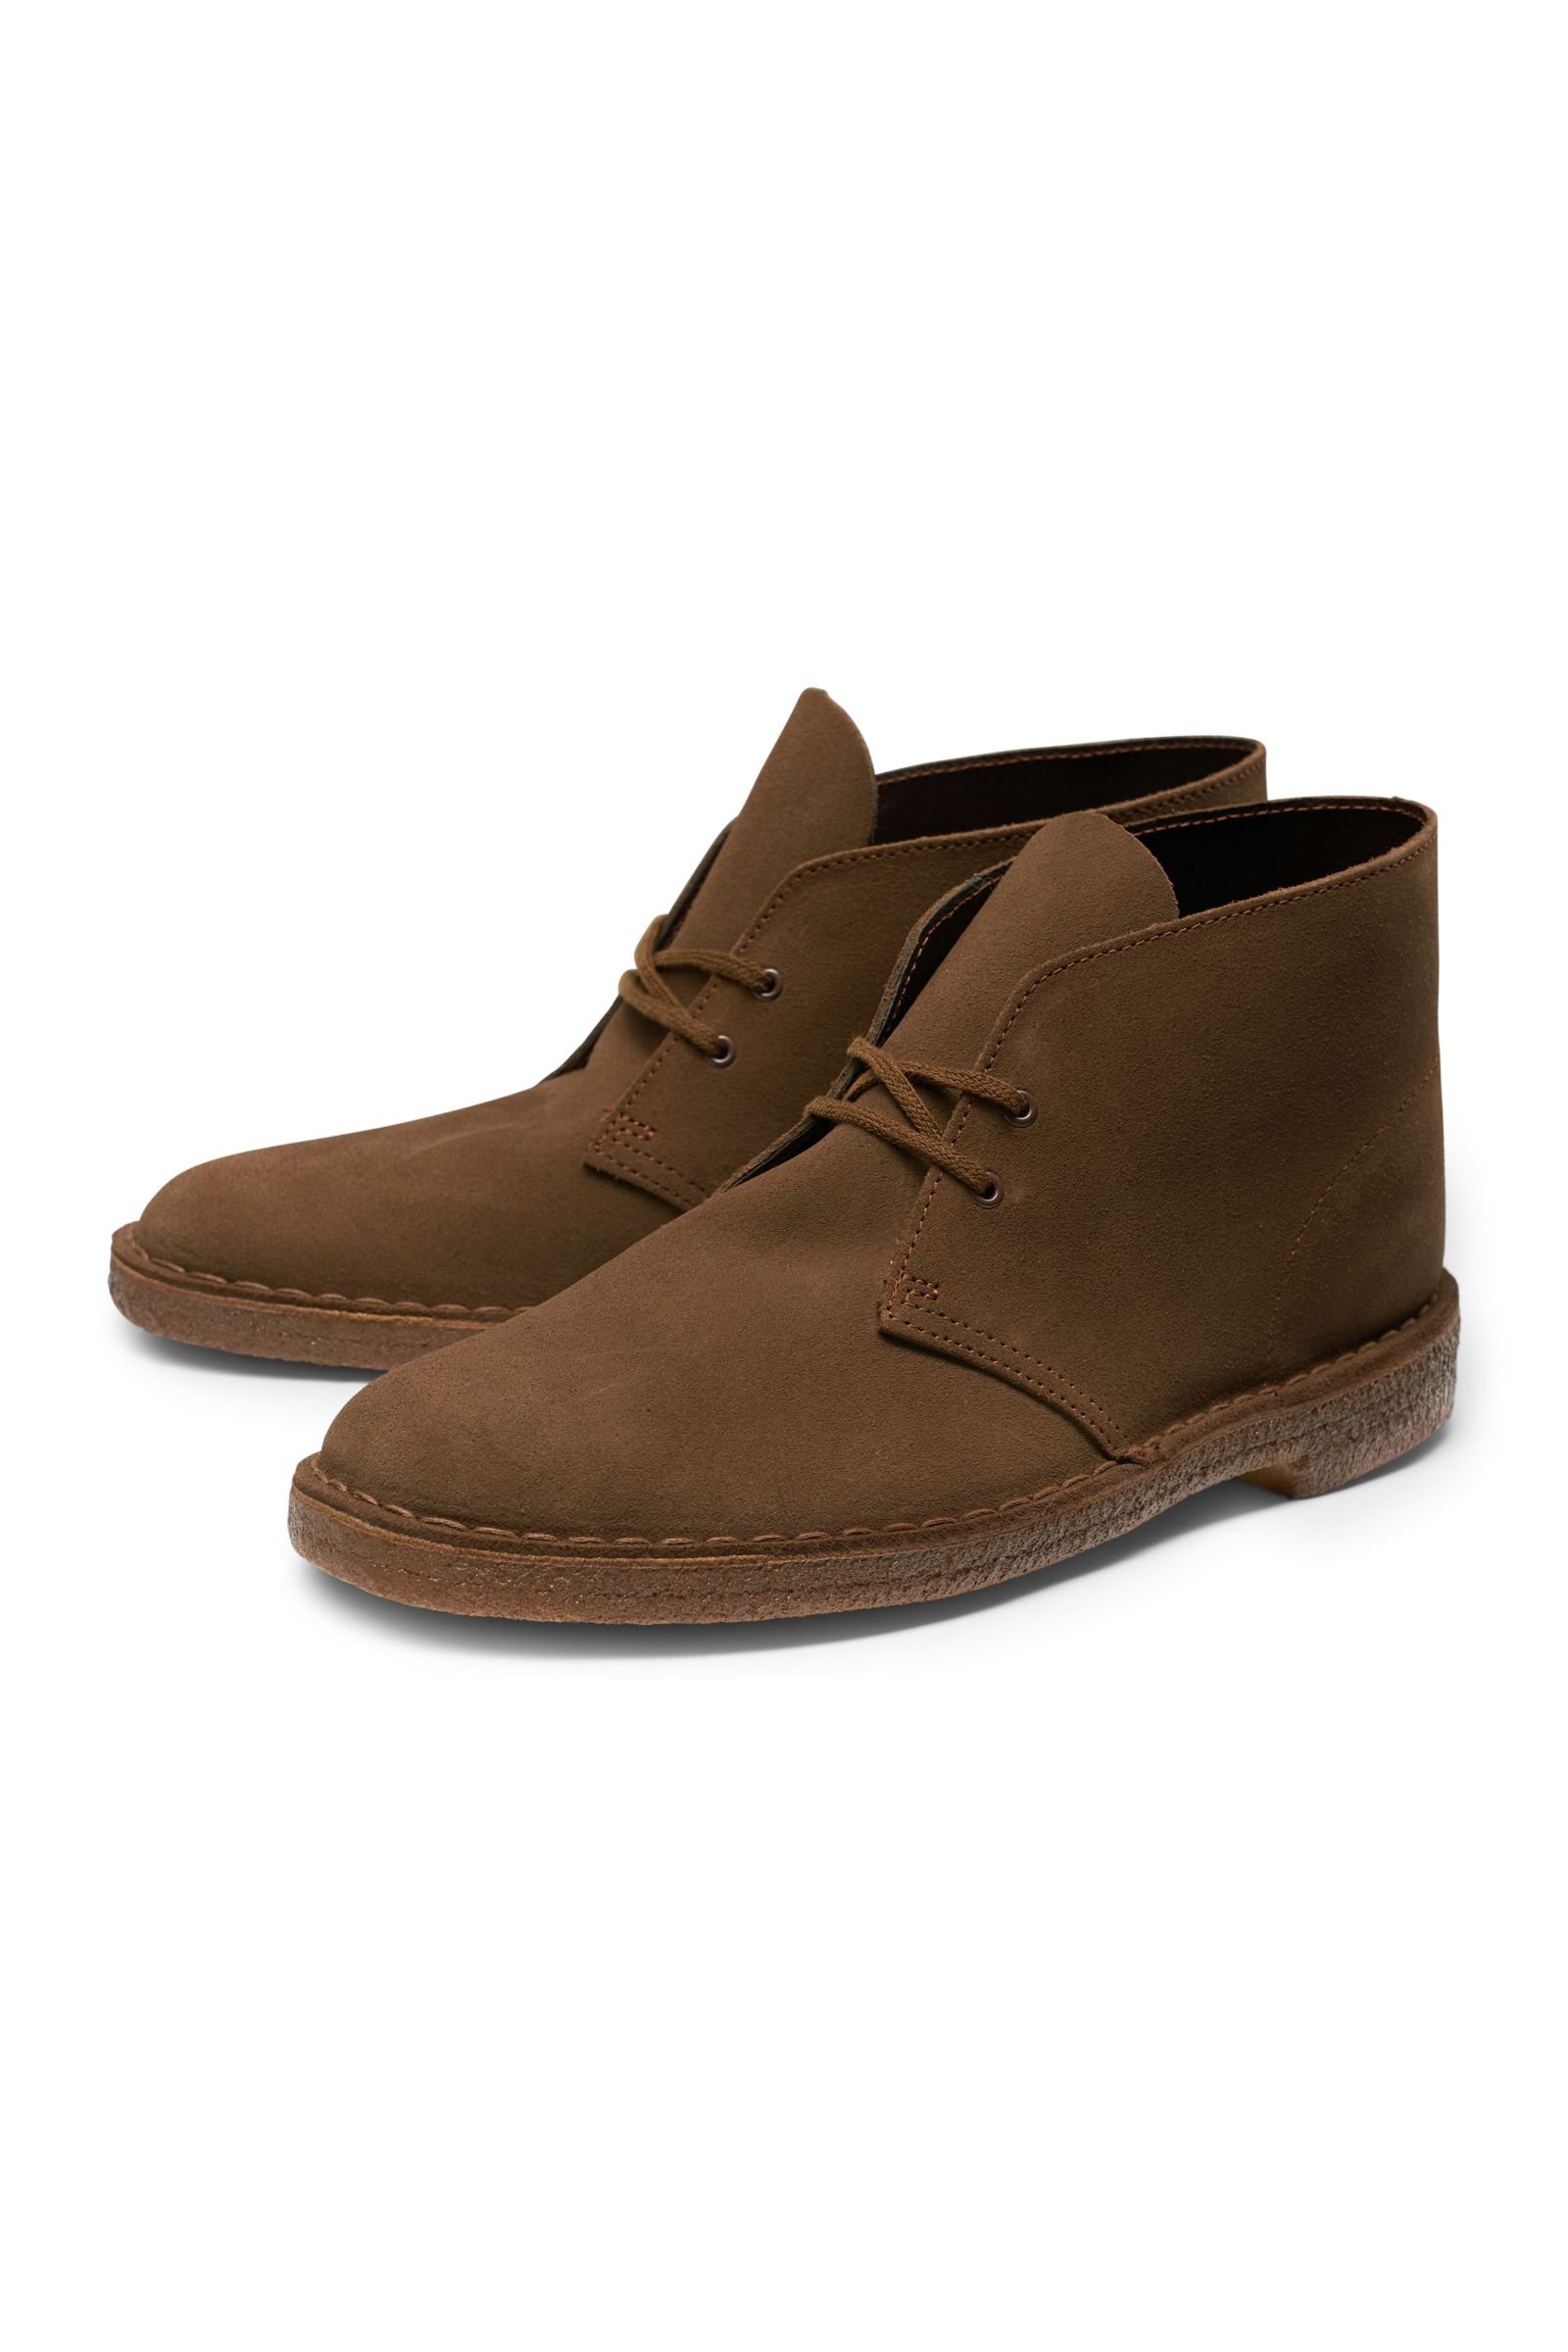 clarks originals desert boots brown